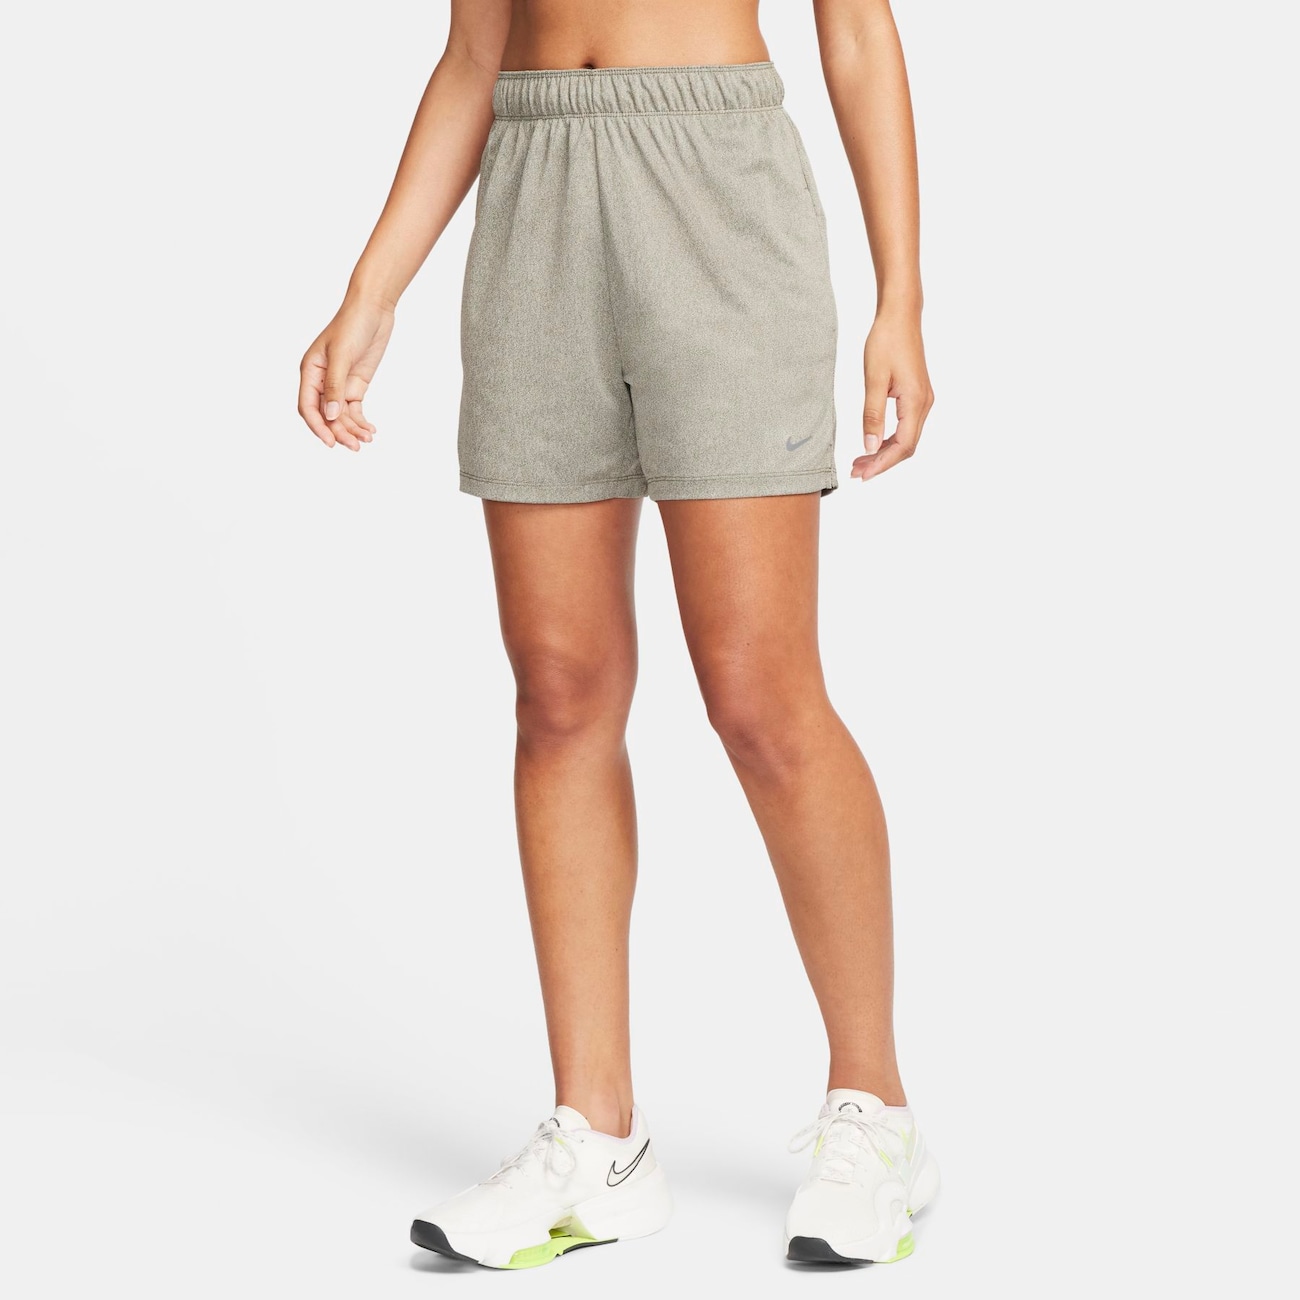 Nike Attack ongevoerde fitnesshorts met Dri-FIT en halfhoge taille voor dames (13 cm) - Groen